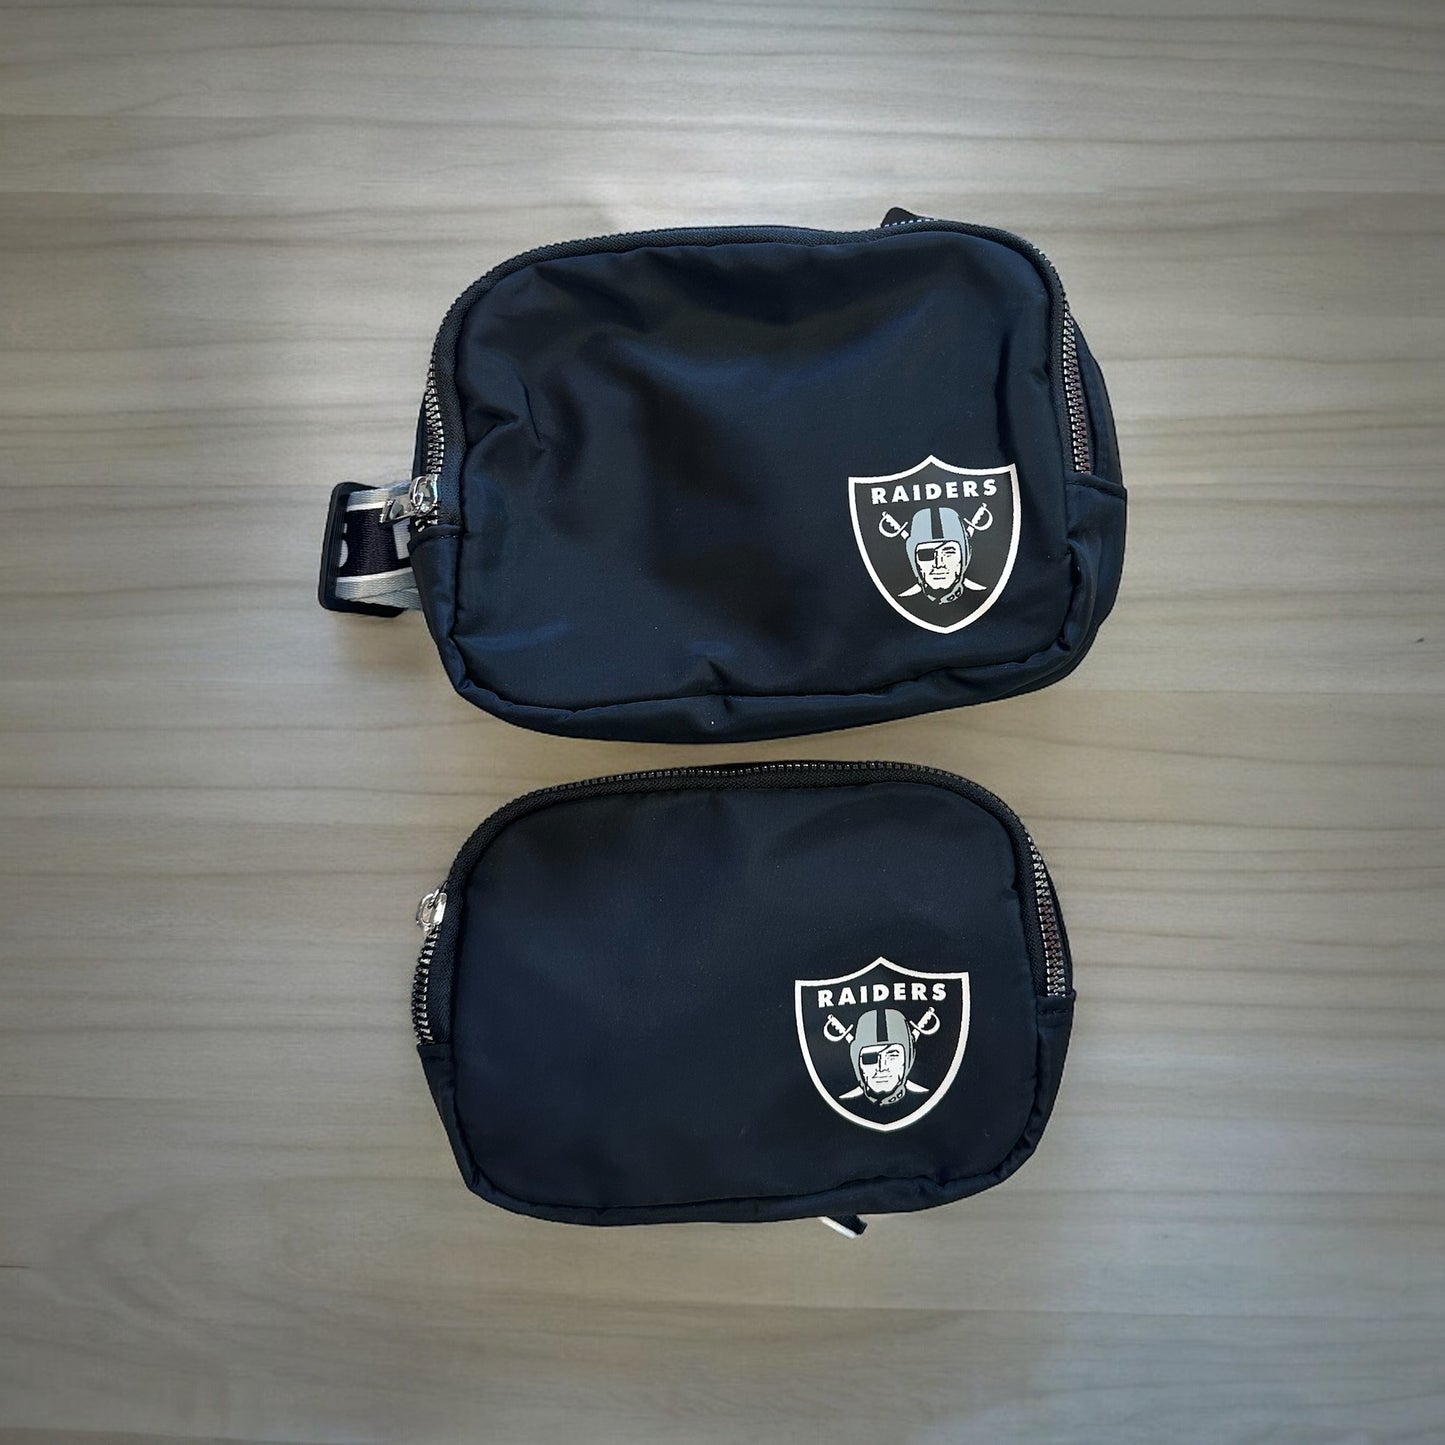 Raider NFL Unisex-Adult NFL Team Color Crossbody Belt Bag